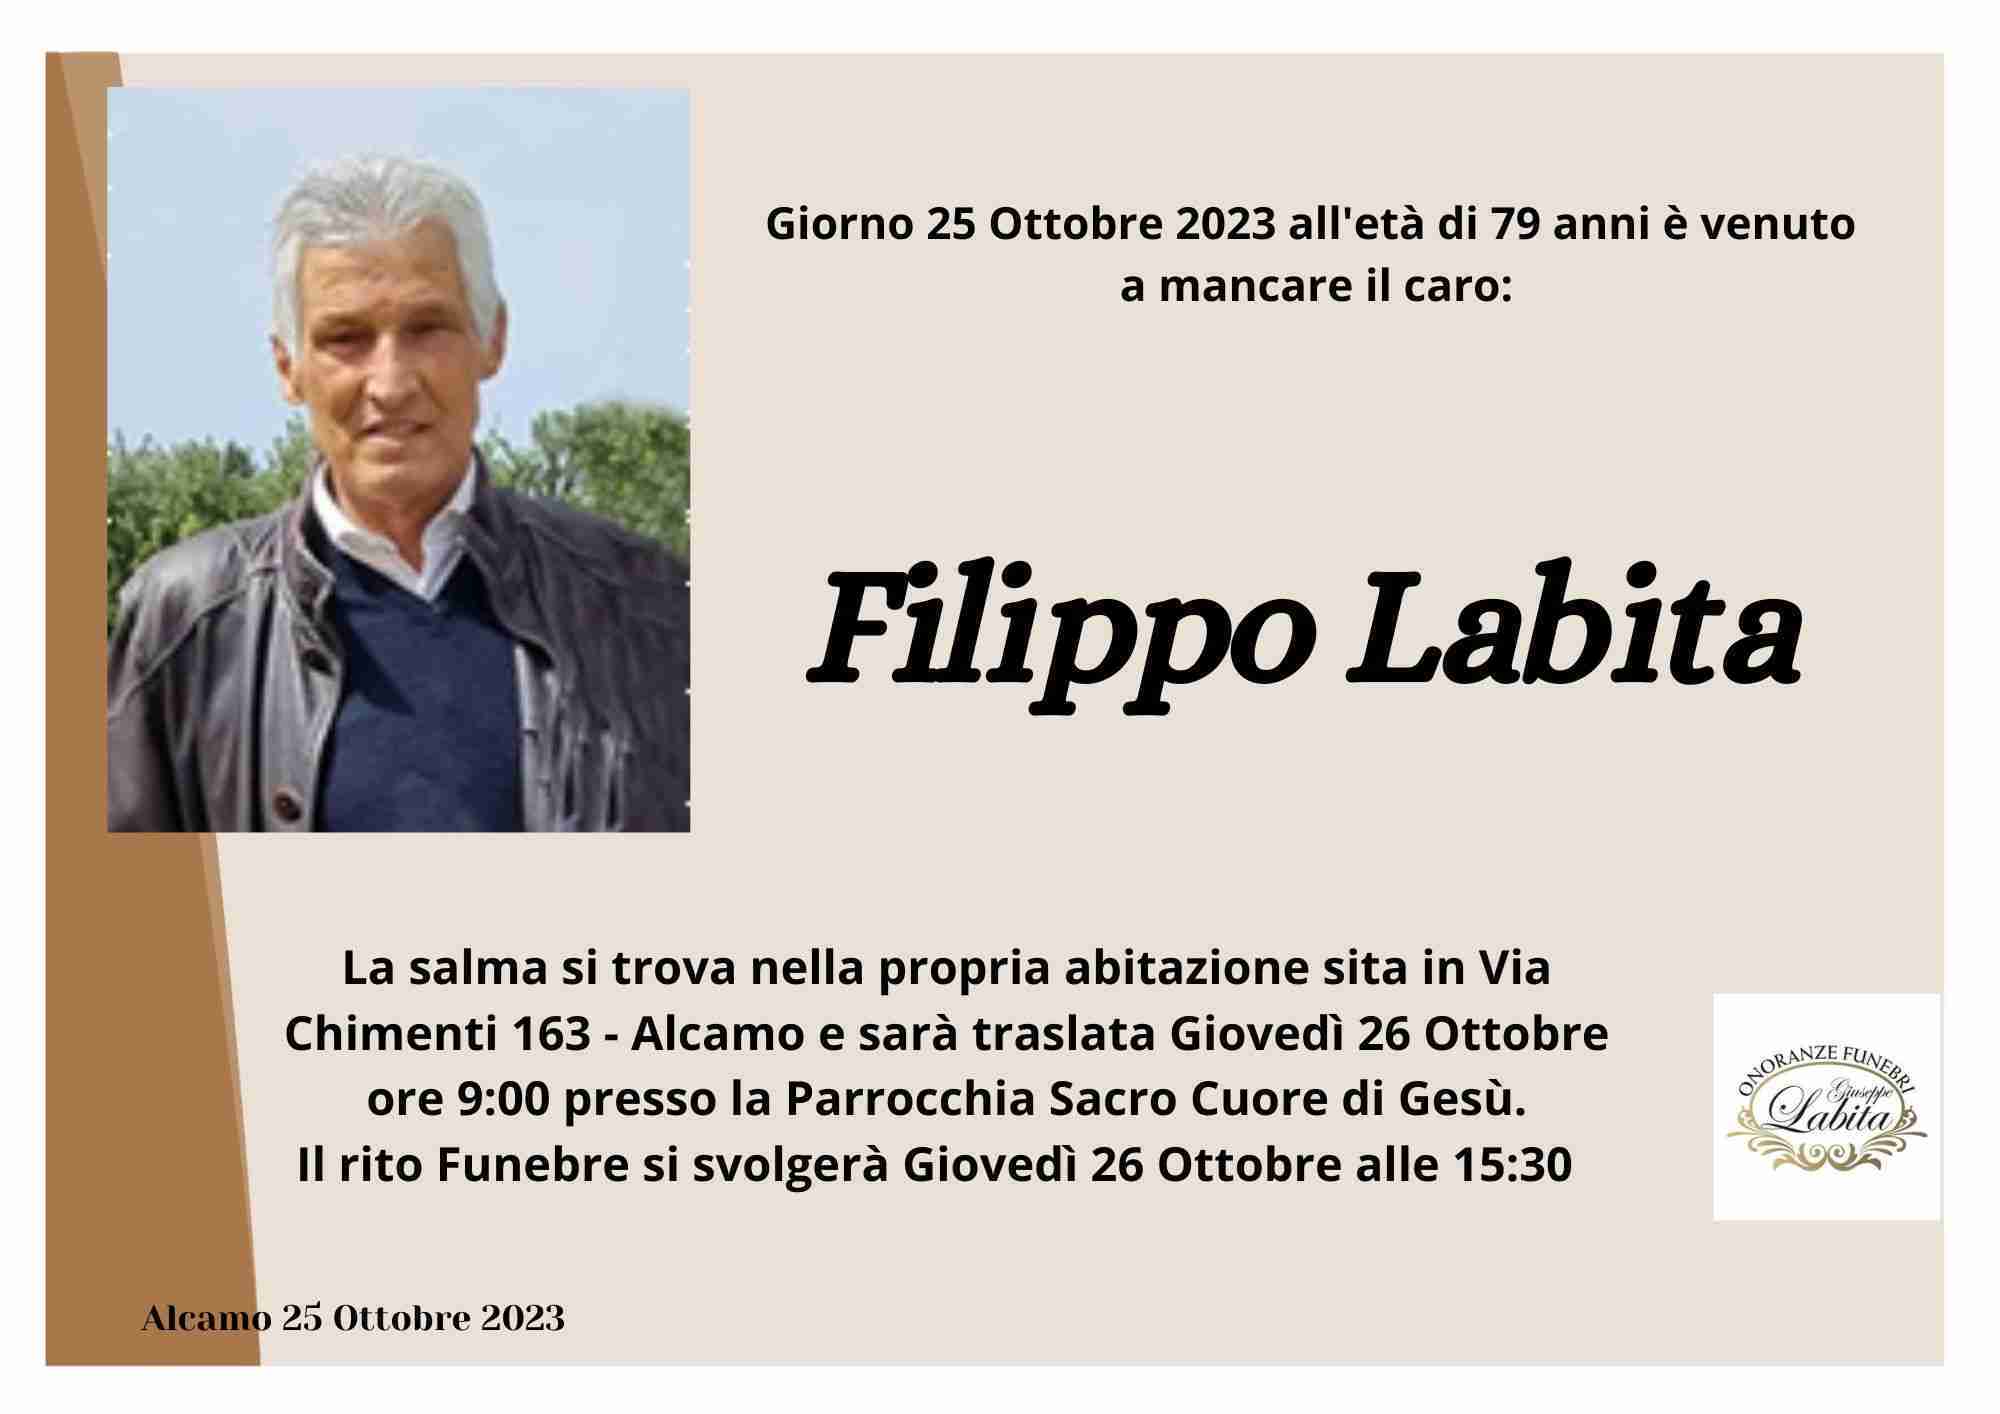 Filippo Labita